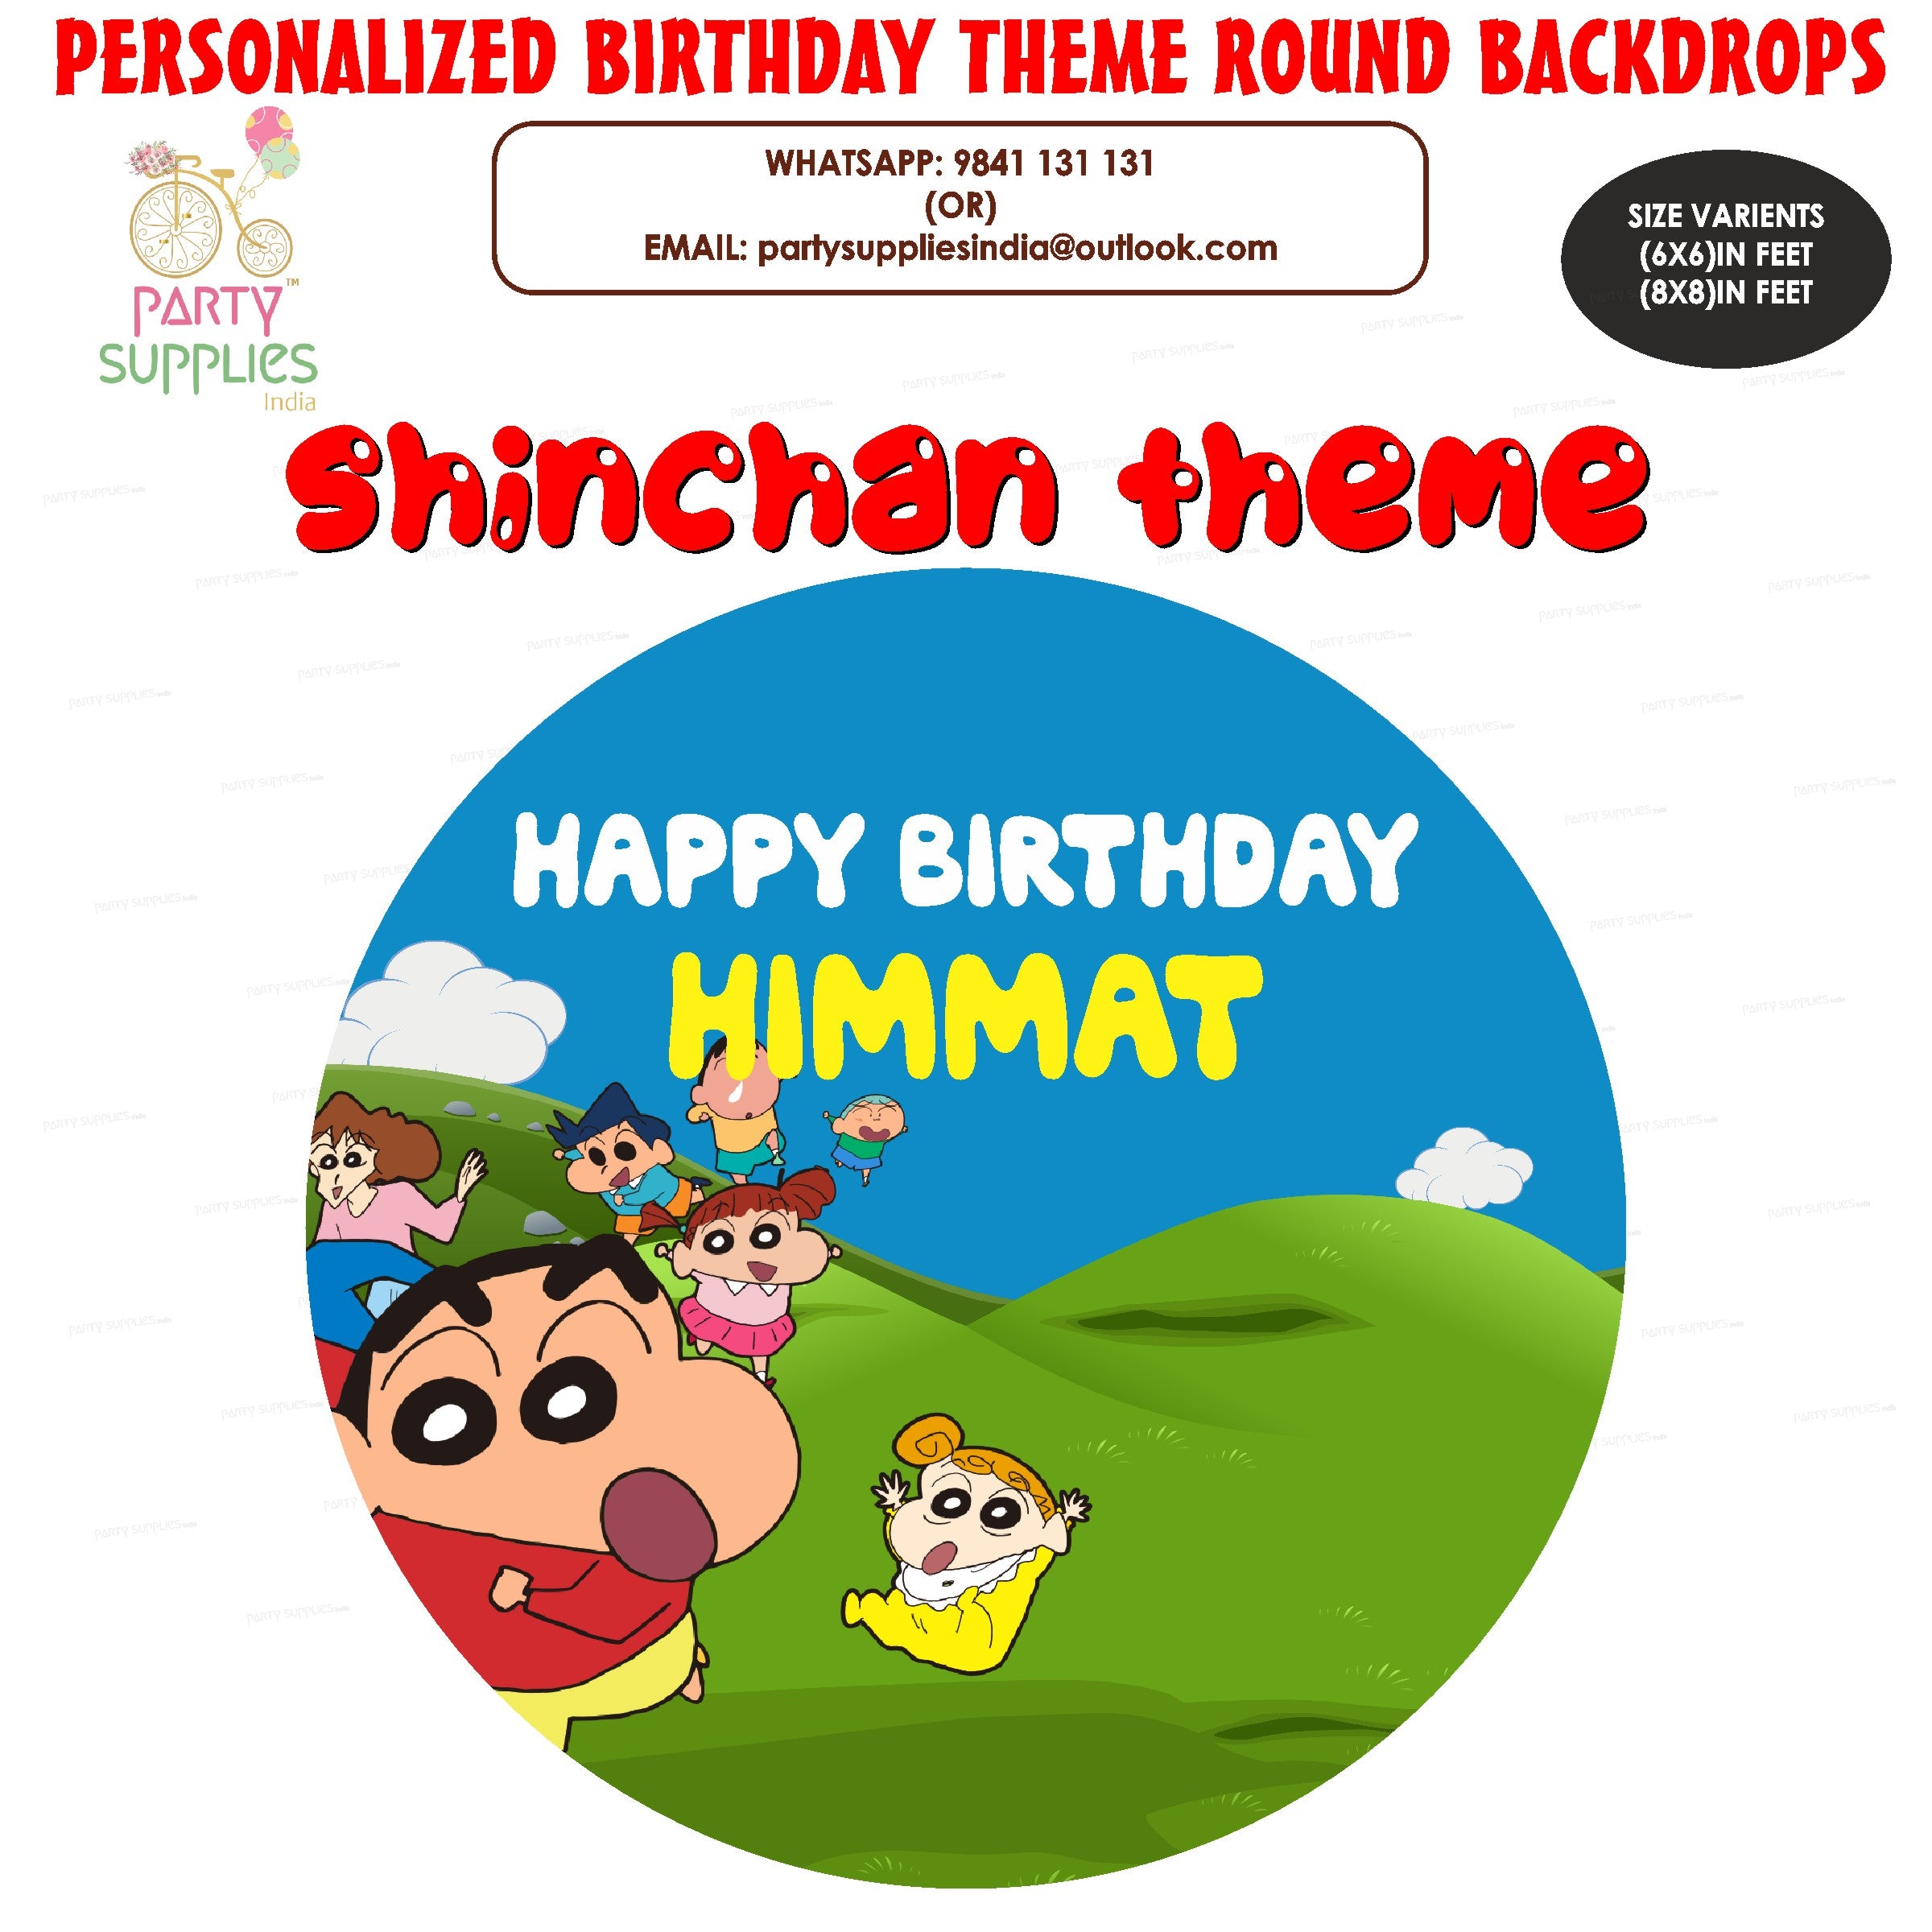 PSI Shinchan Theme Customized Round Backdrop